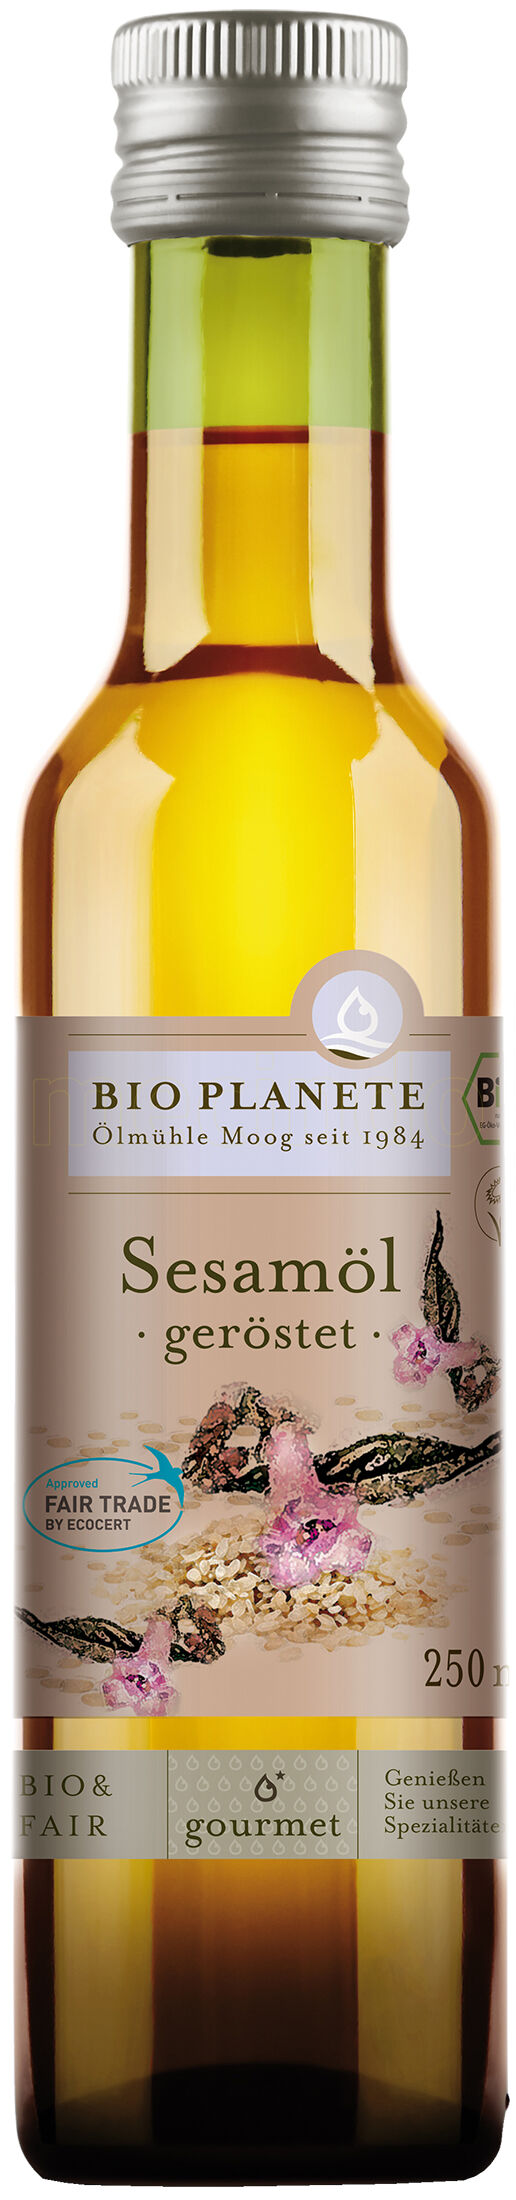 BioPlanète Bio Planete Sesamolje Ristet Ø - 250 ml